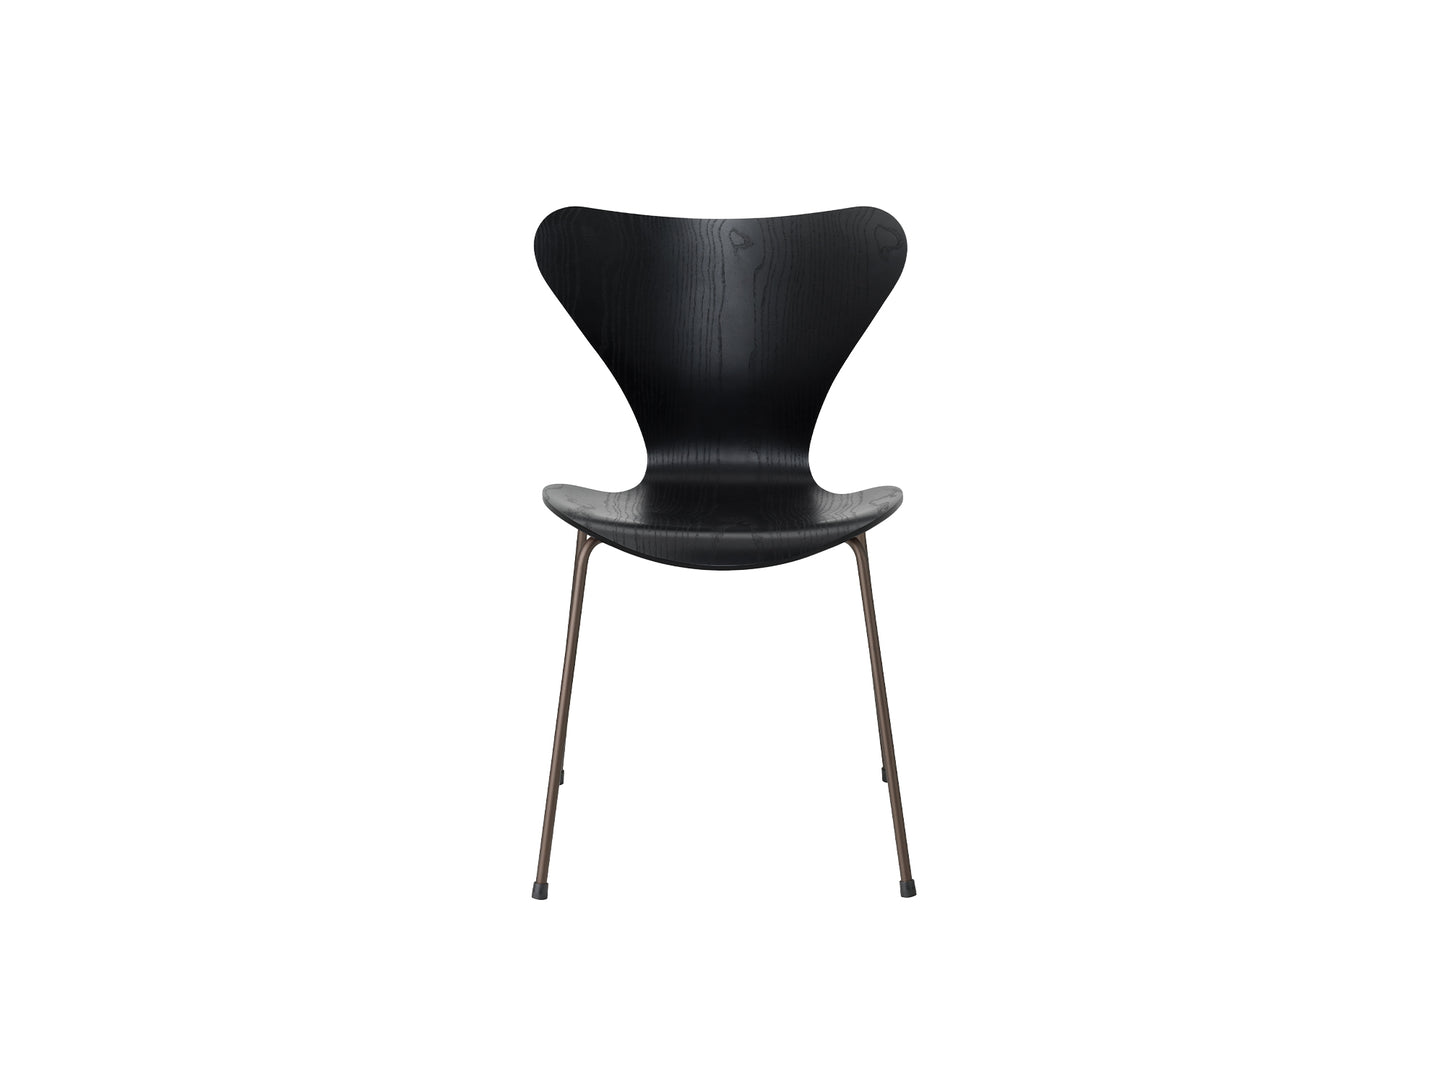 Series 7™ 3107 Dining Chair by Fritz Hansen - Black Coloured Ash Veneer Shell / Brown Bronze Steel